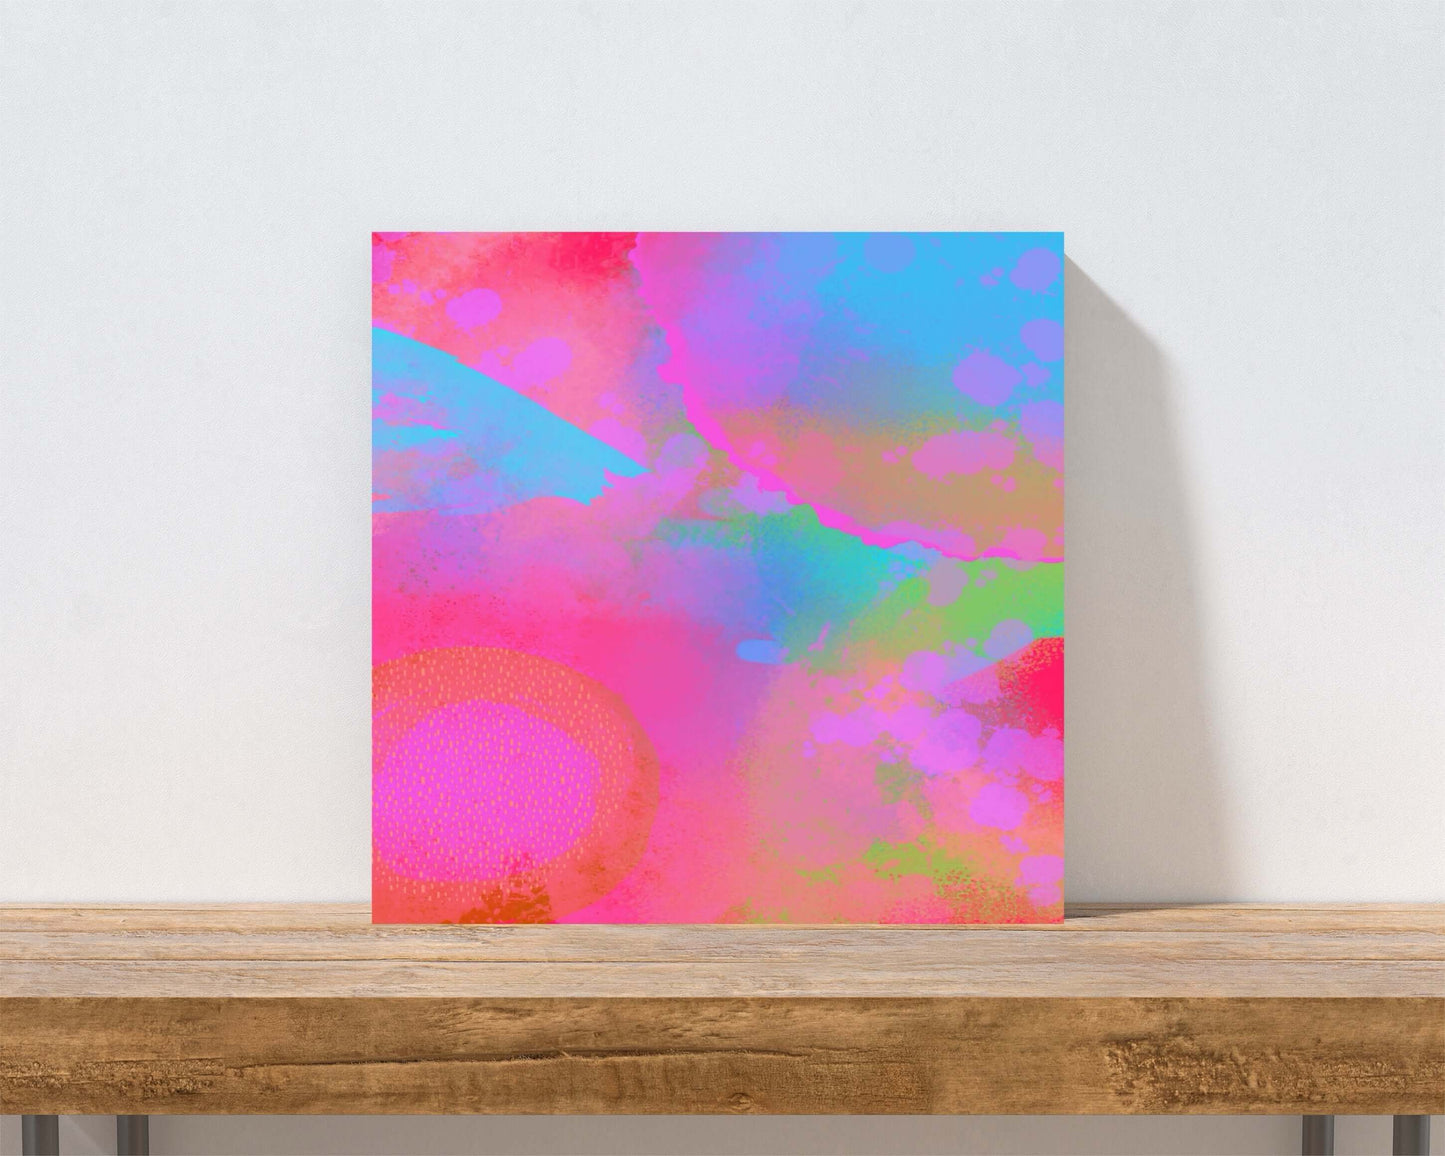 Hot Pink Intergalactic “Between Worlds” Abstract Art Canvas Print Wall Art Small Canvas on Shelf